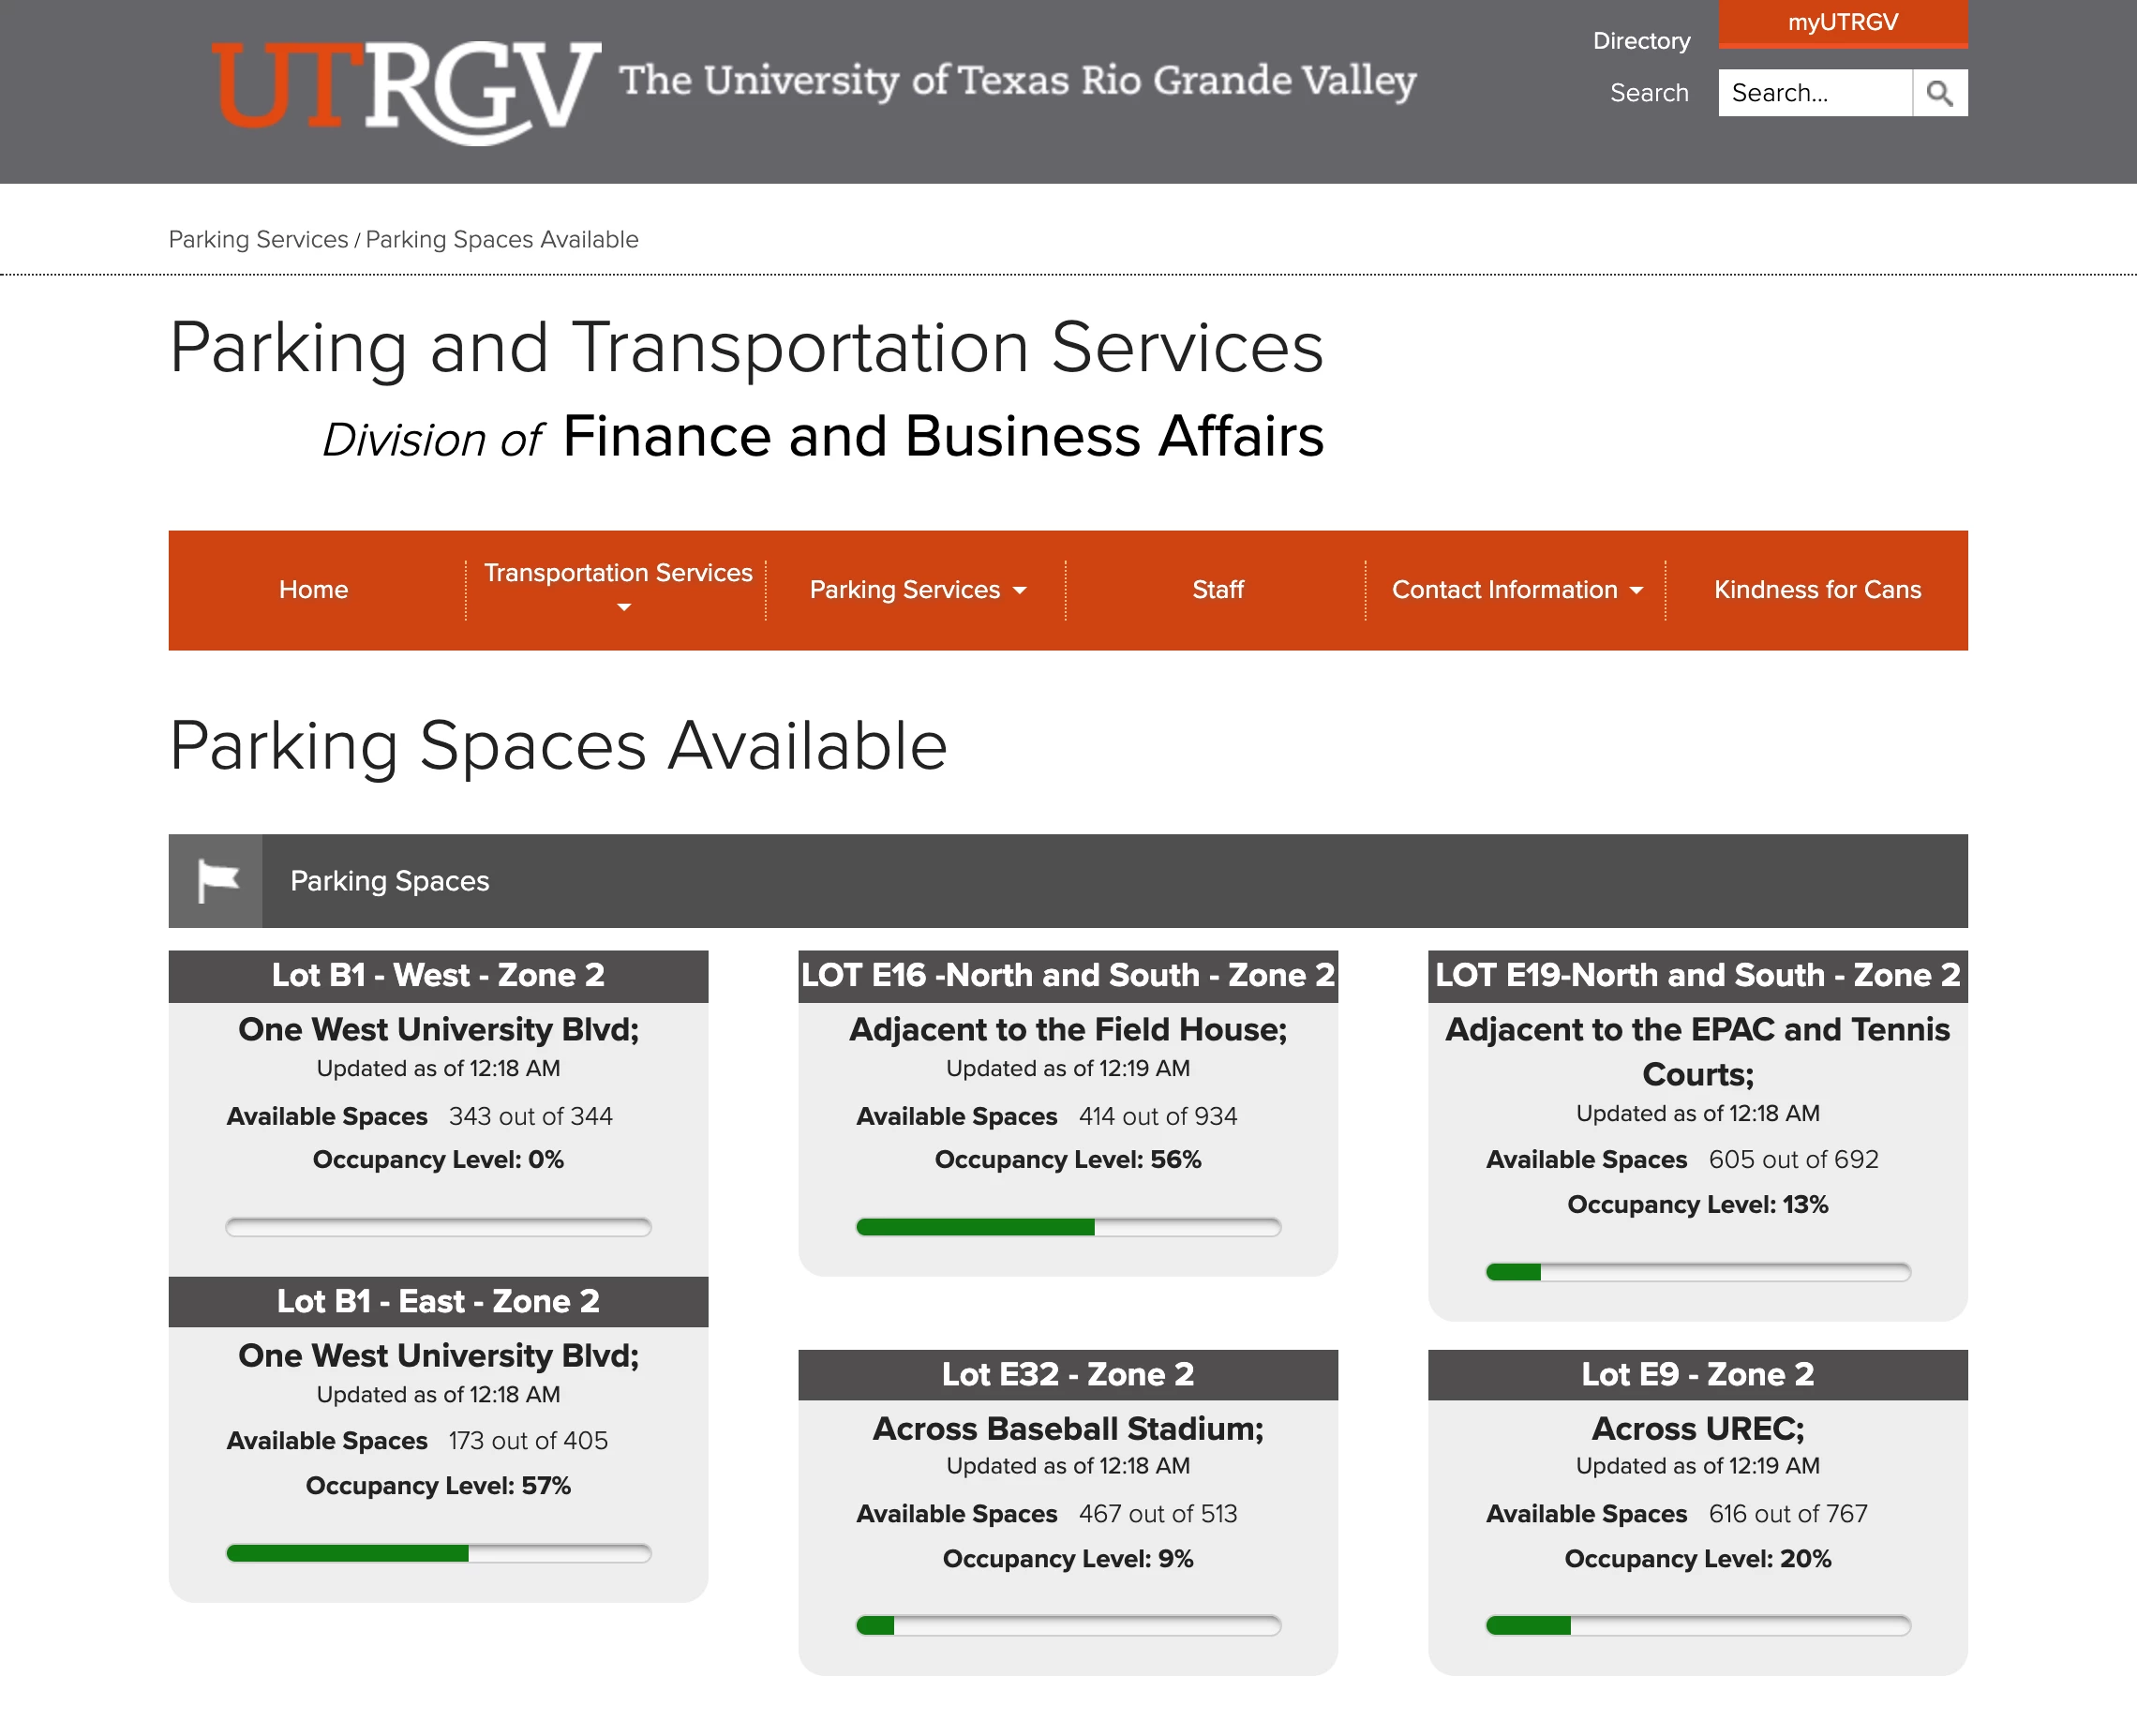 Parking Spaces Available desktop screenshot.